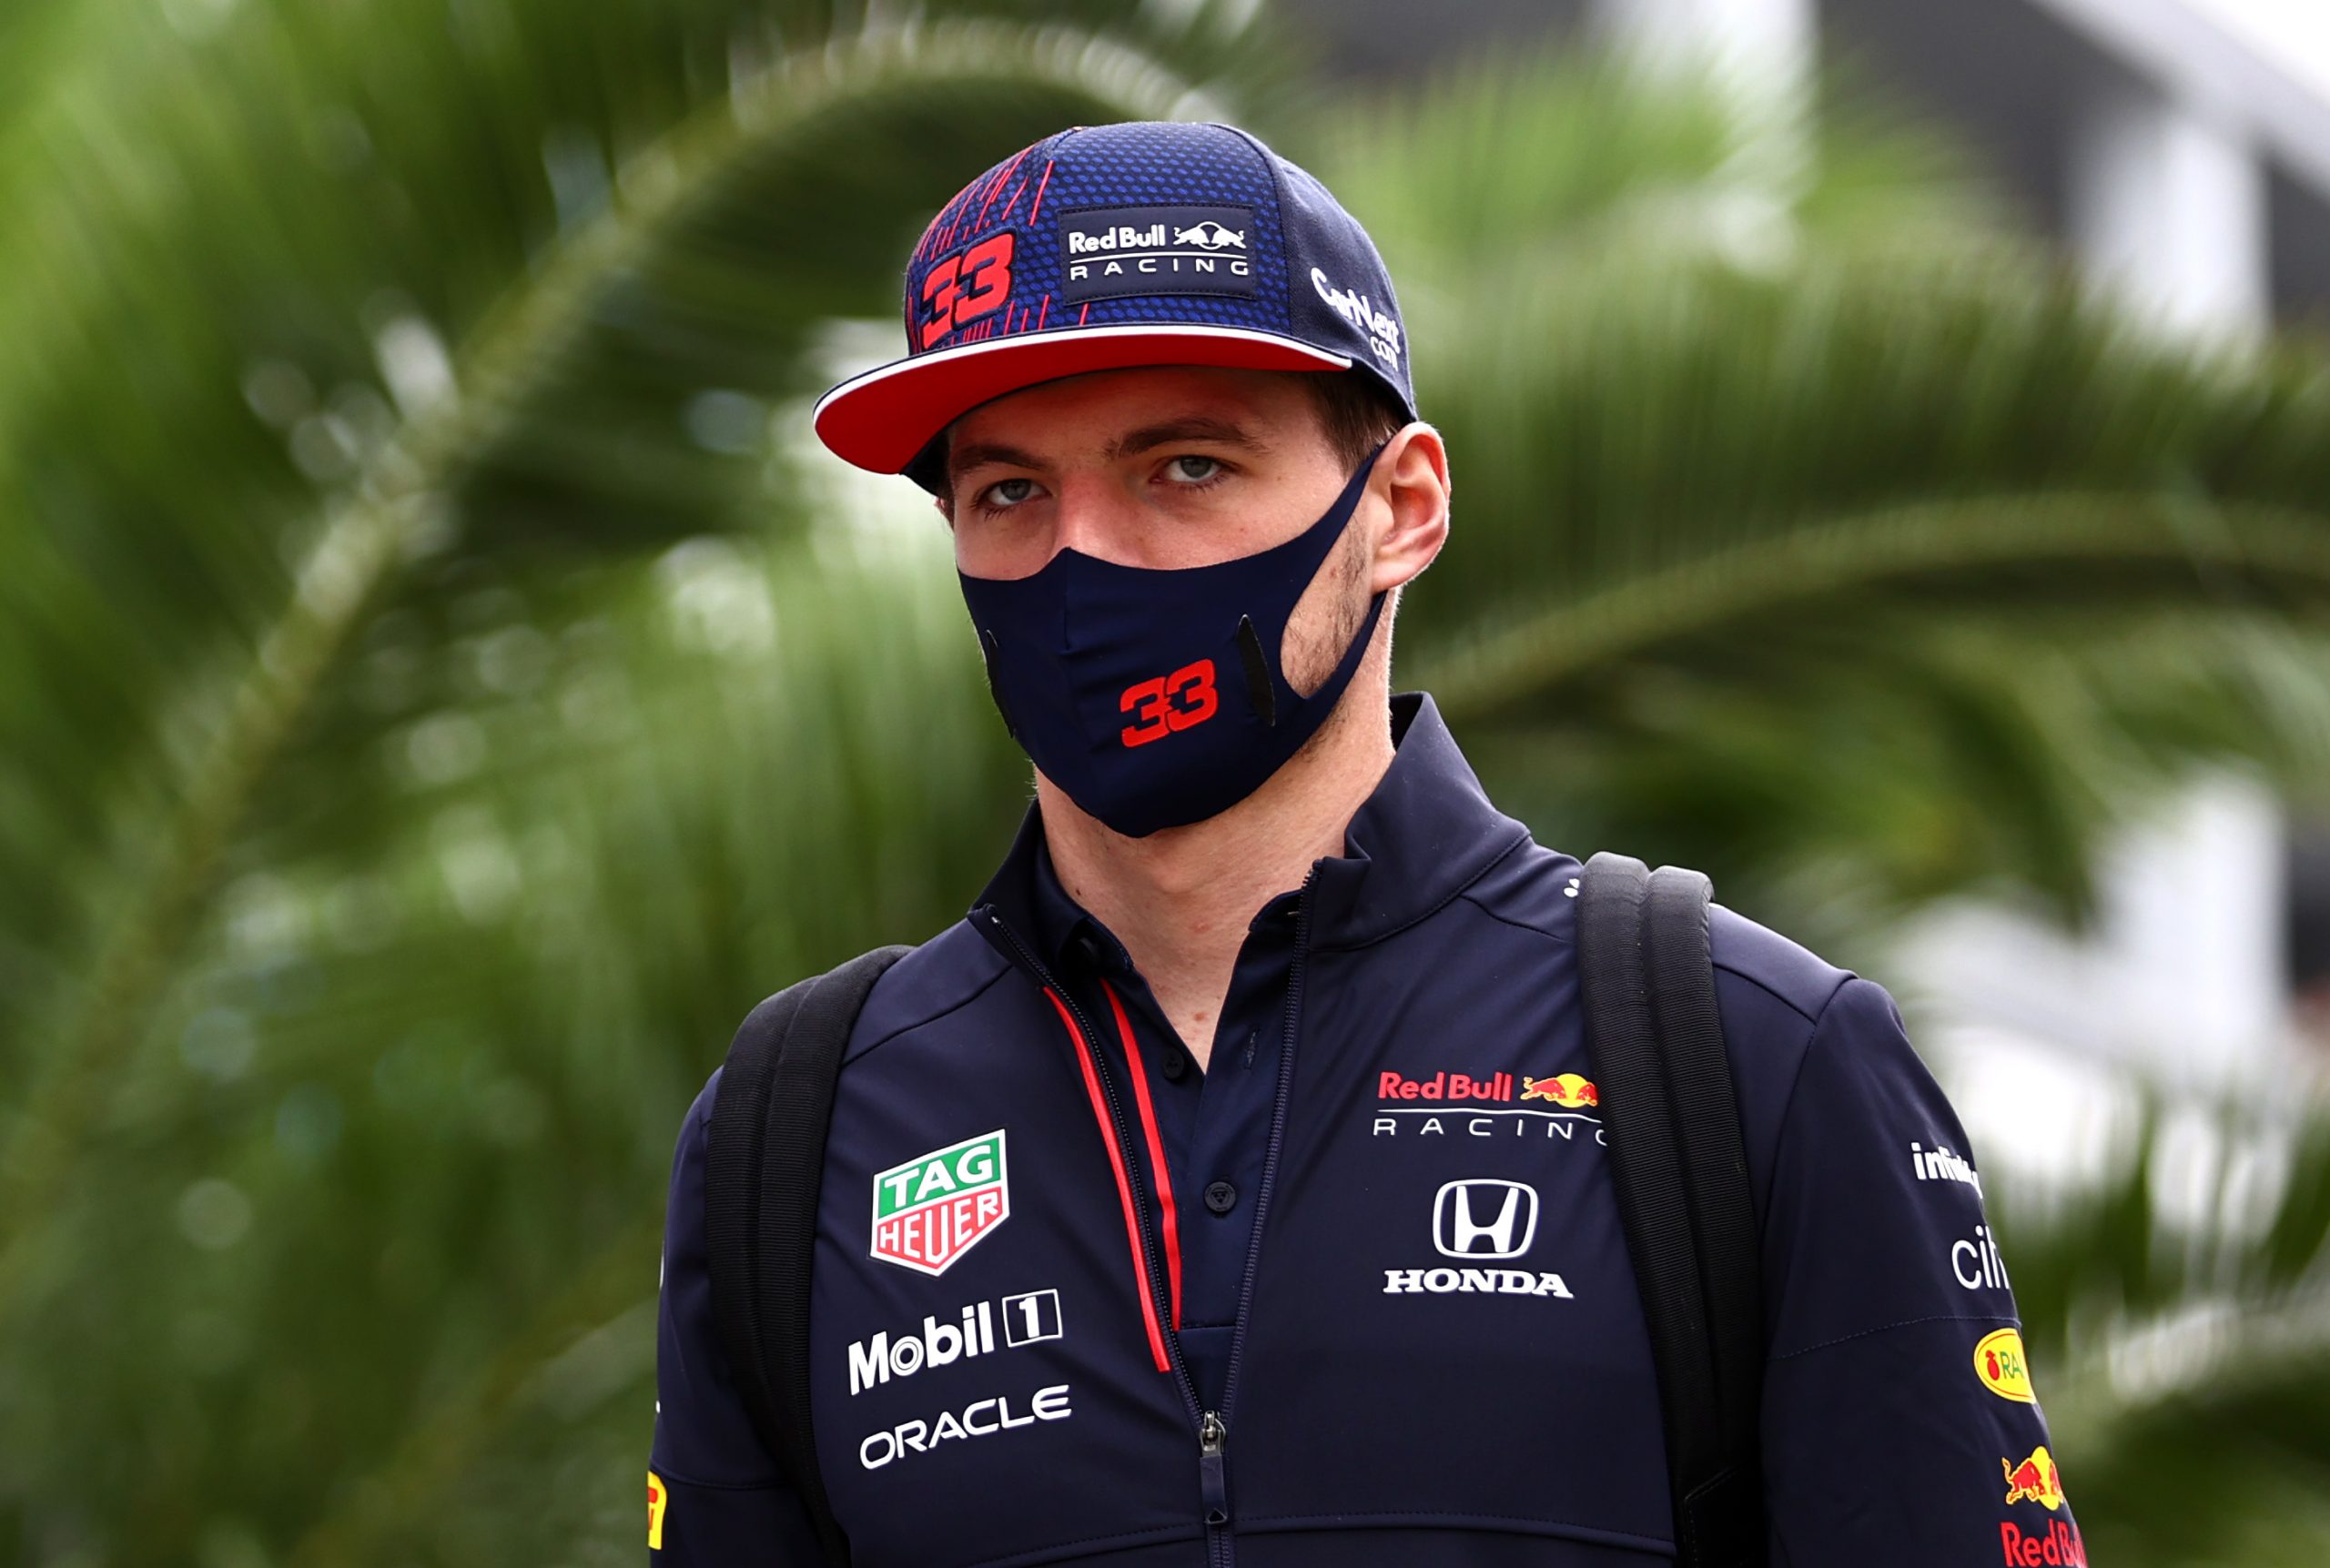 Max Verstappen beim Grand Prix in Russland